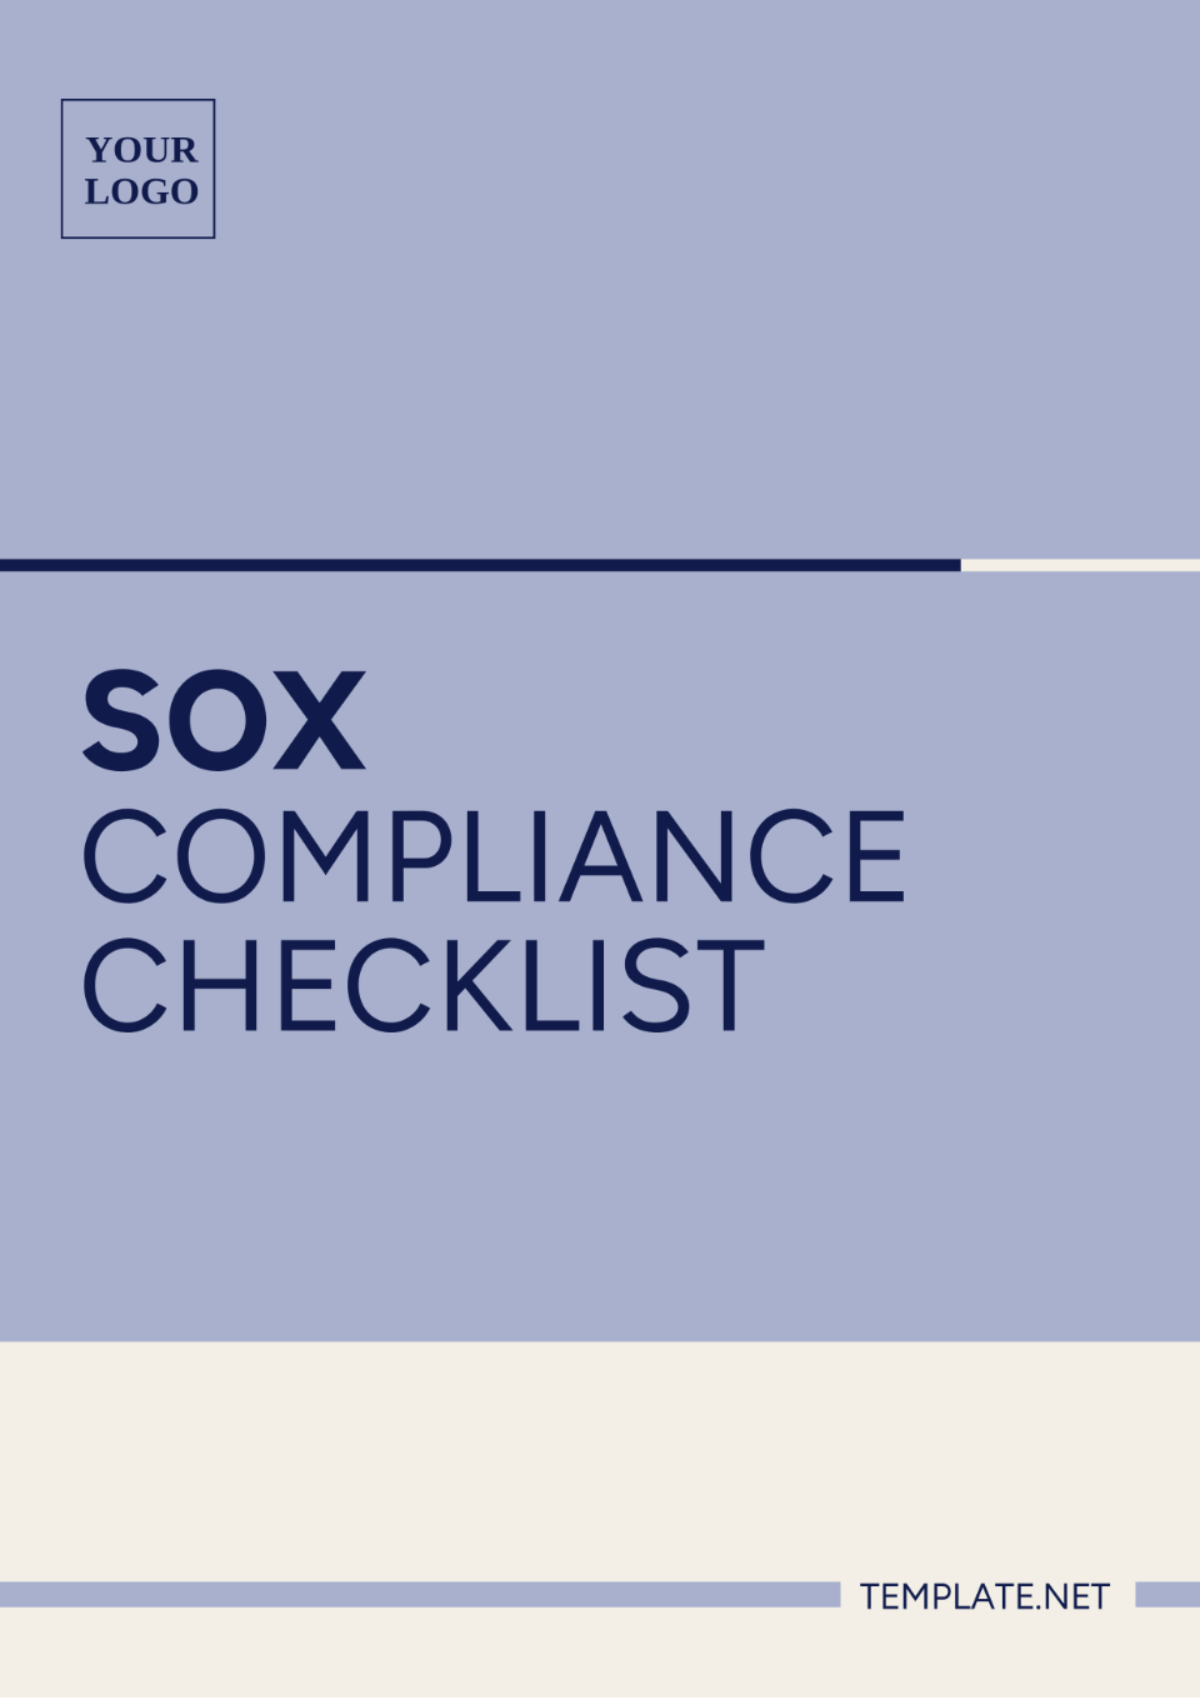 SOX Compliance Checklist Template